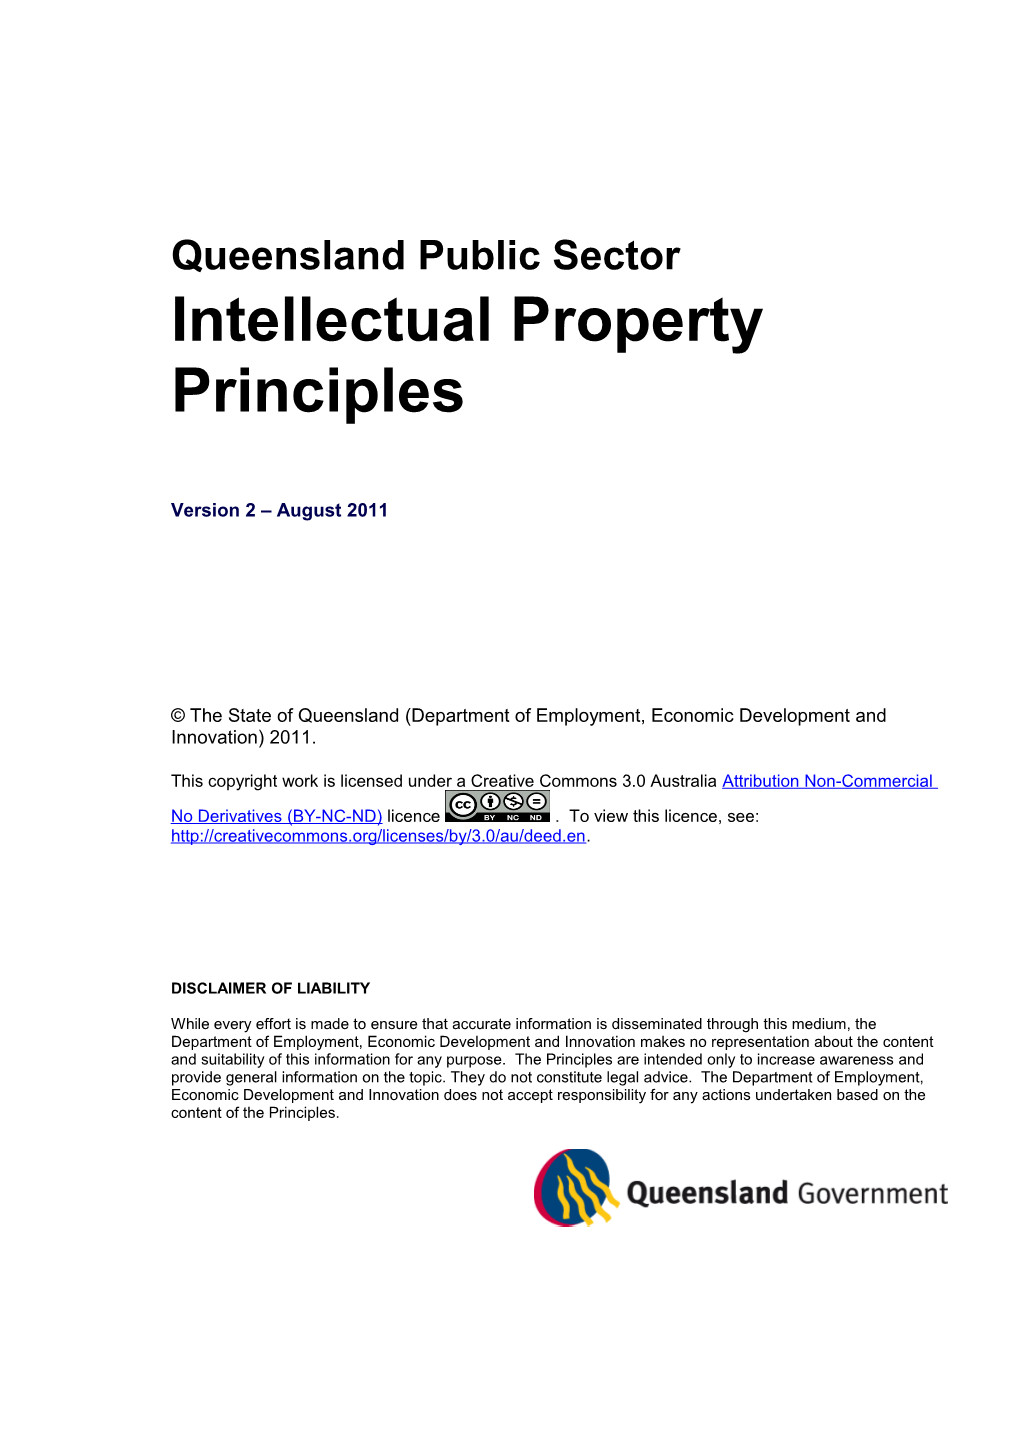 Queensland Public Sectorintellectual Property Principles